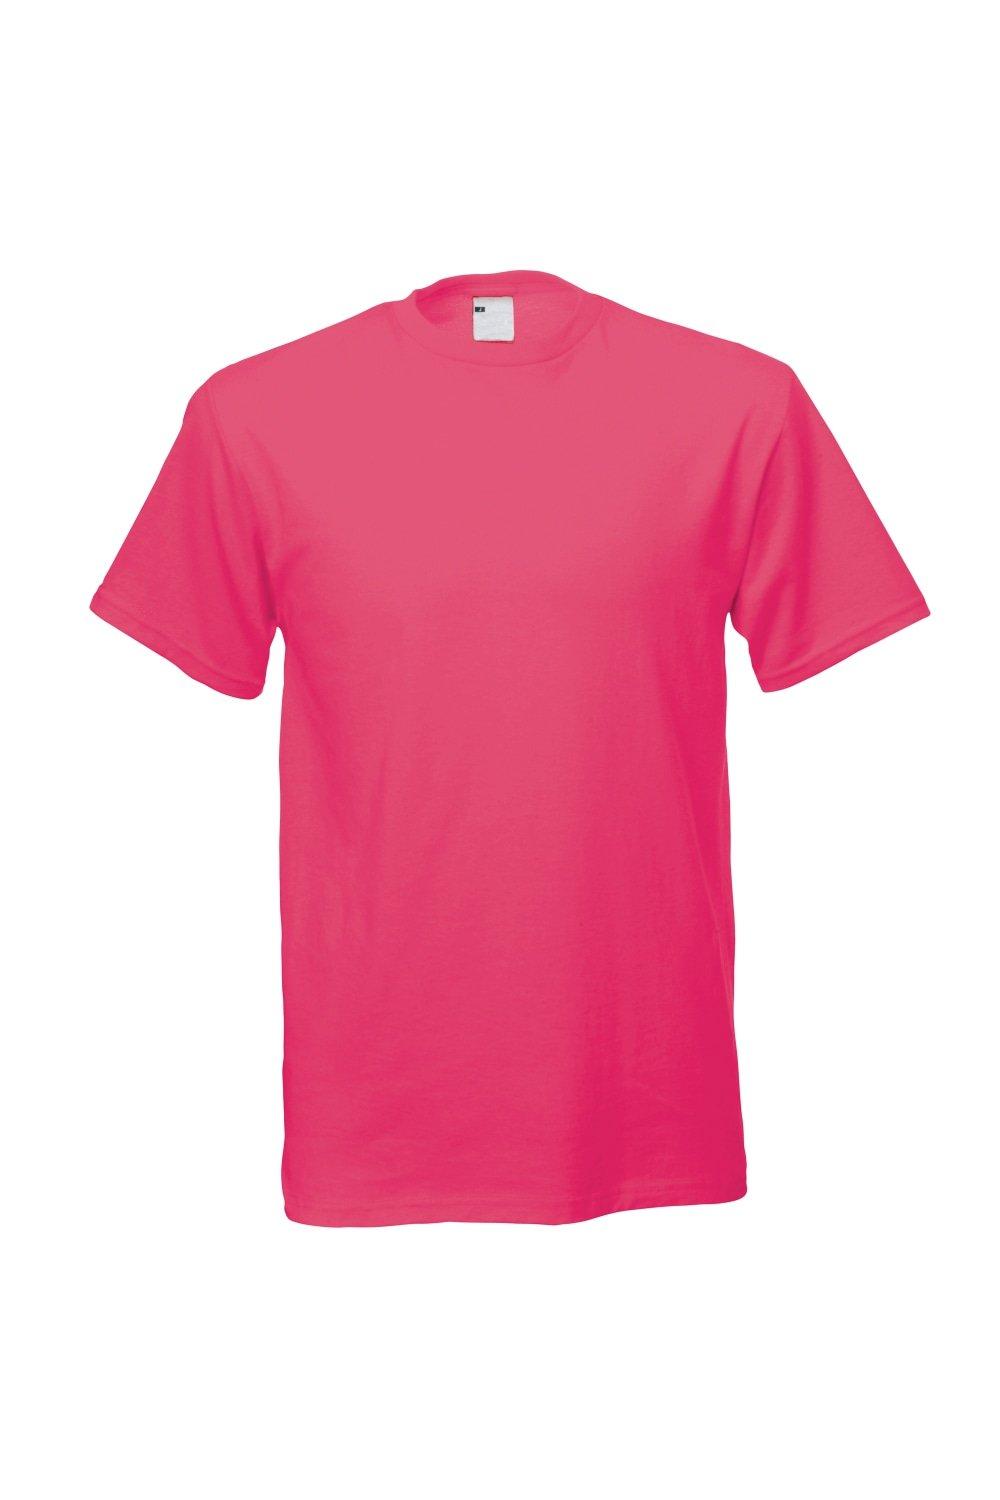 Повседневная футболка с коротким рукавом Universal Textiles, розовый мужская футболка лиса русская краса xl серый меланж